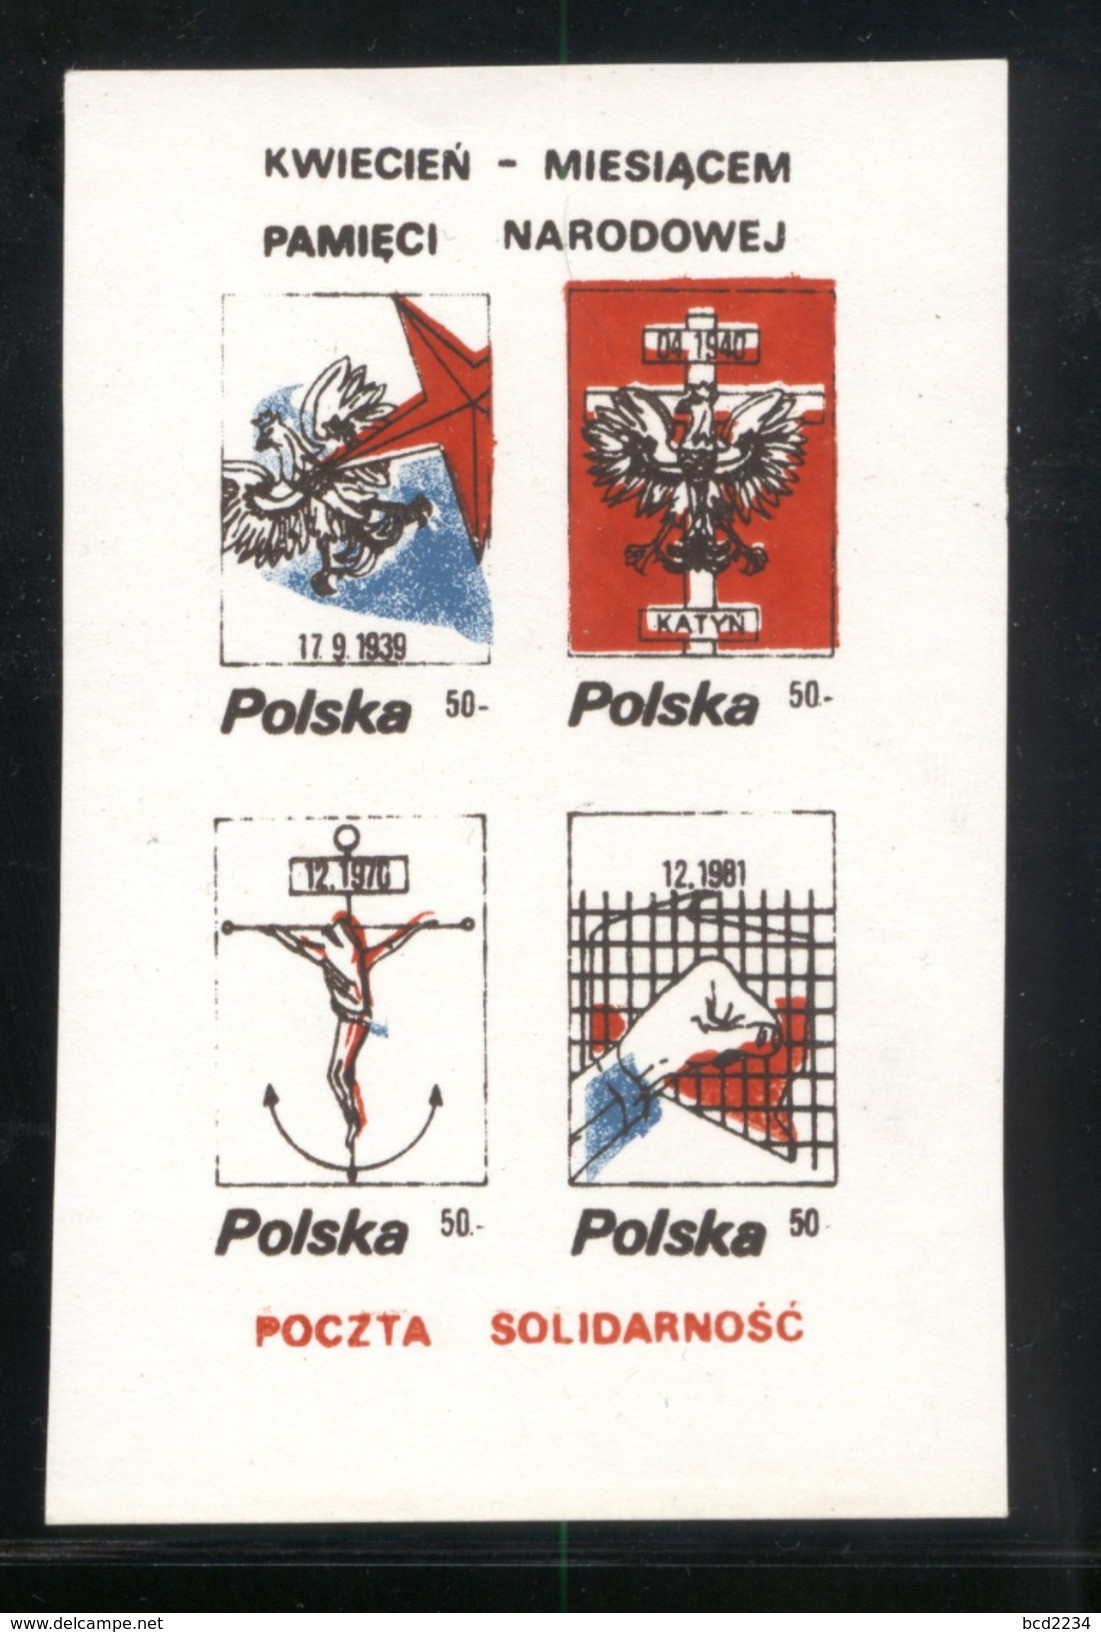 POLAND SOLIDARNOSC SOLIDARITY (POCZTA SOLIDARNOSC) APRIL NATIONAL MONTH OF REMEMBRANCE MS KATYN WW2 WORLD WAR 2 - Solidarnosc Labels